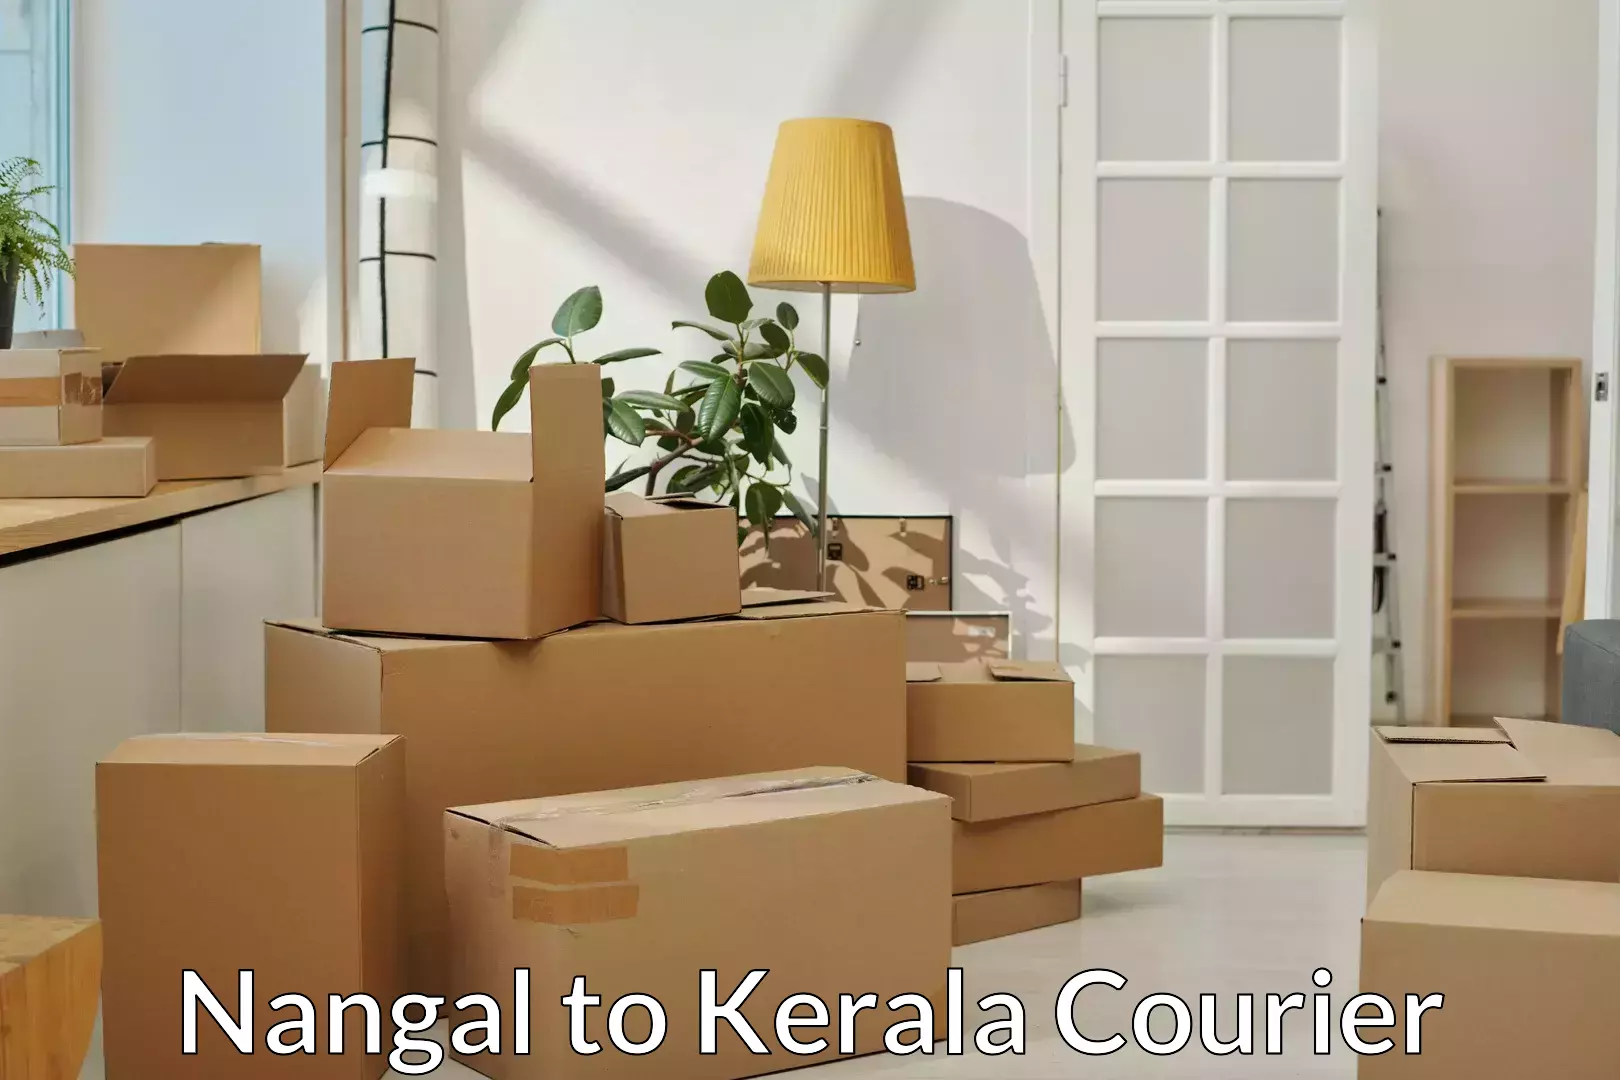 Trusted moving company Nangal to Kerala